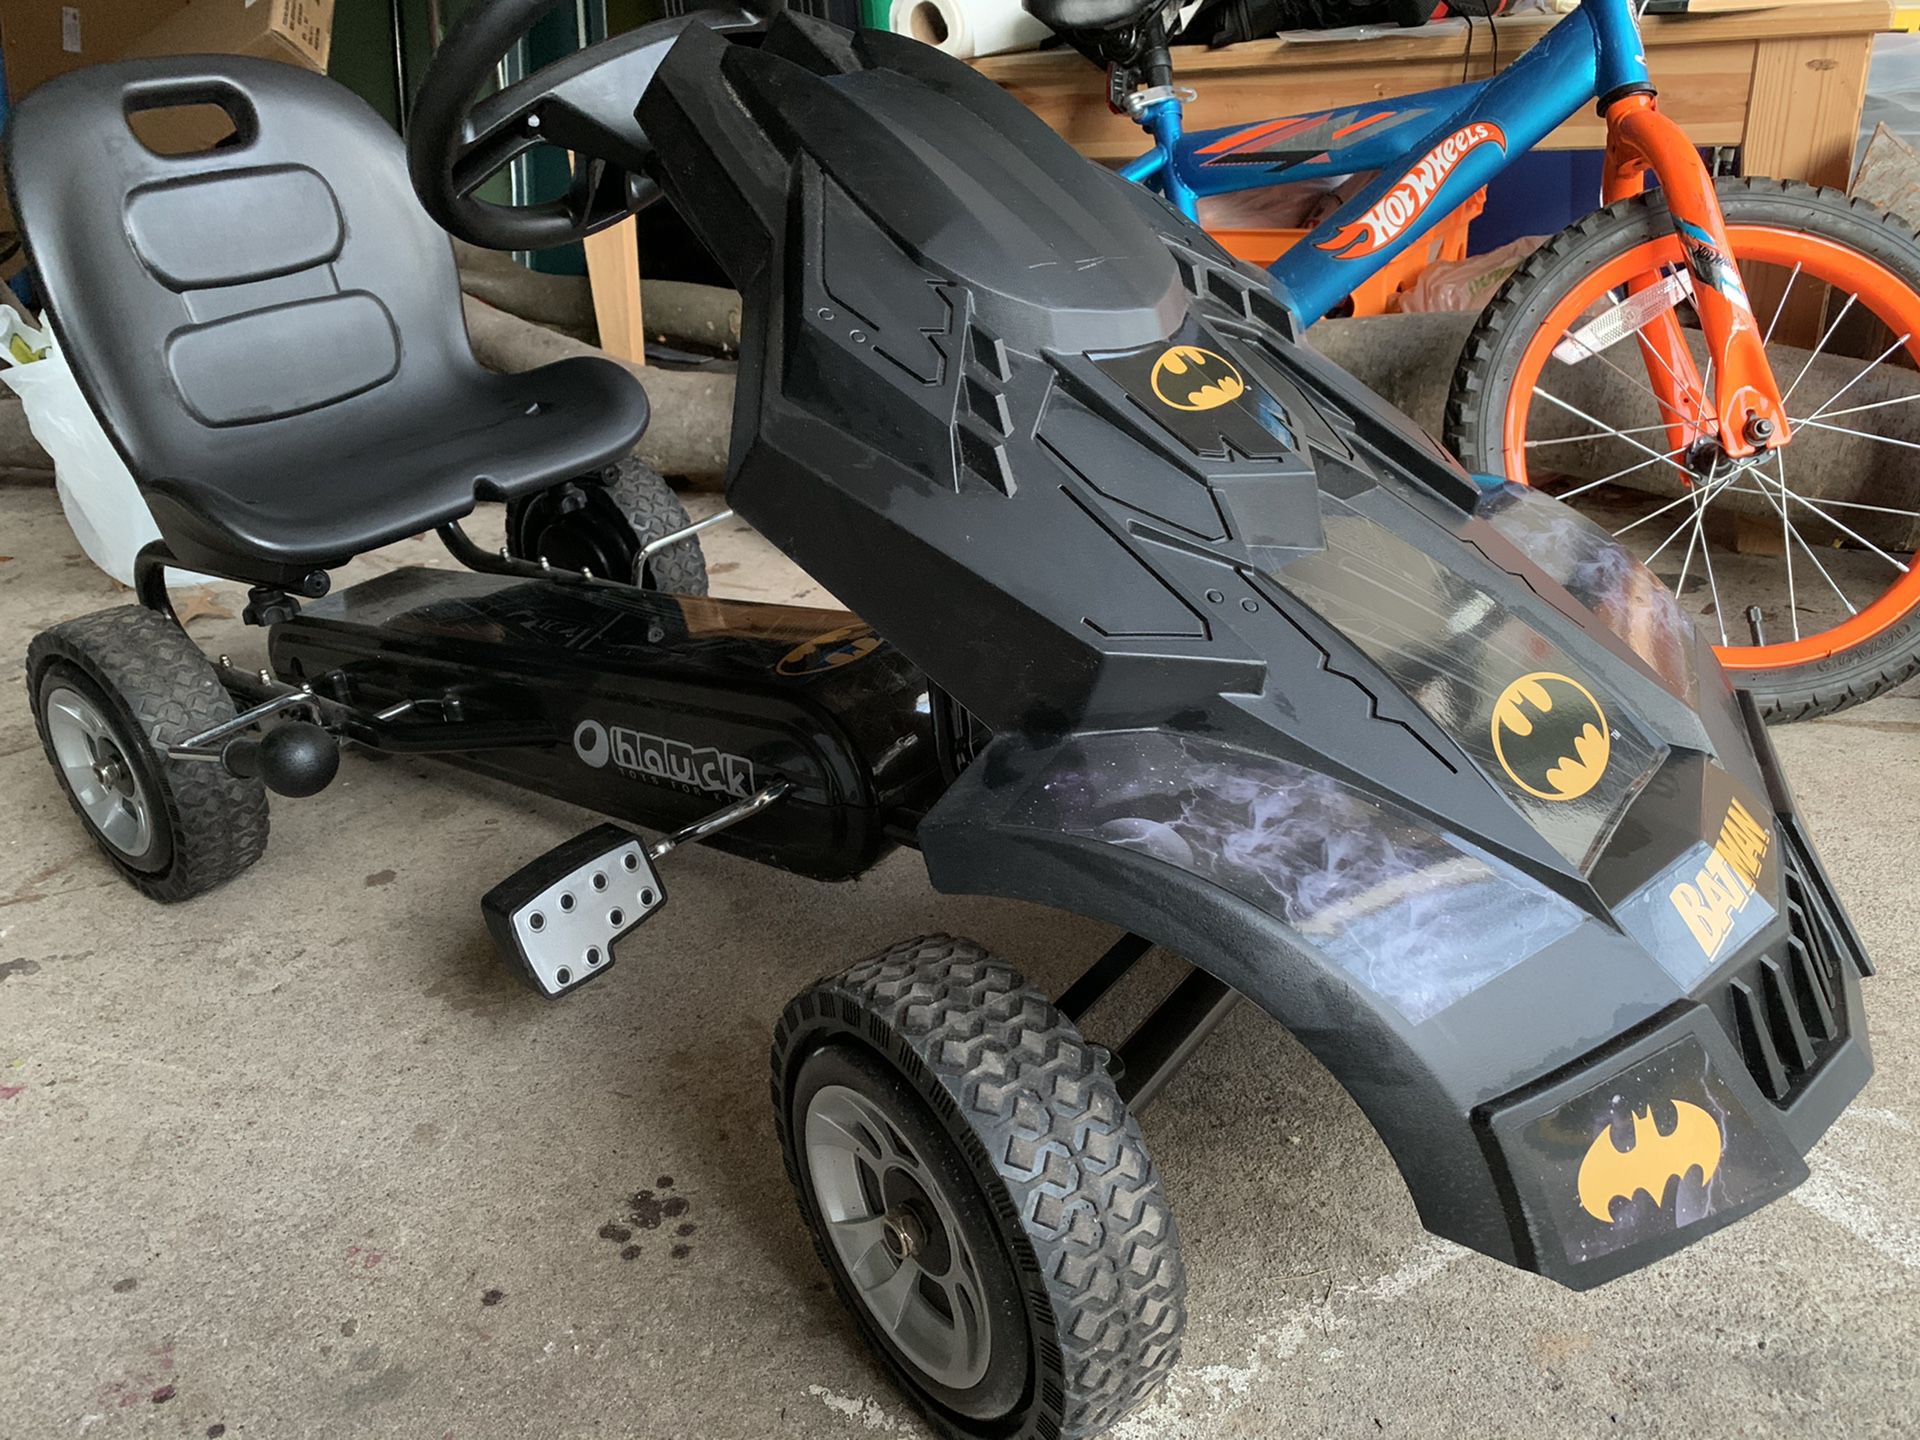 Batman pedal go kart